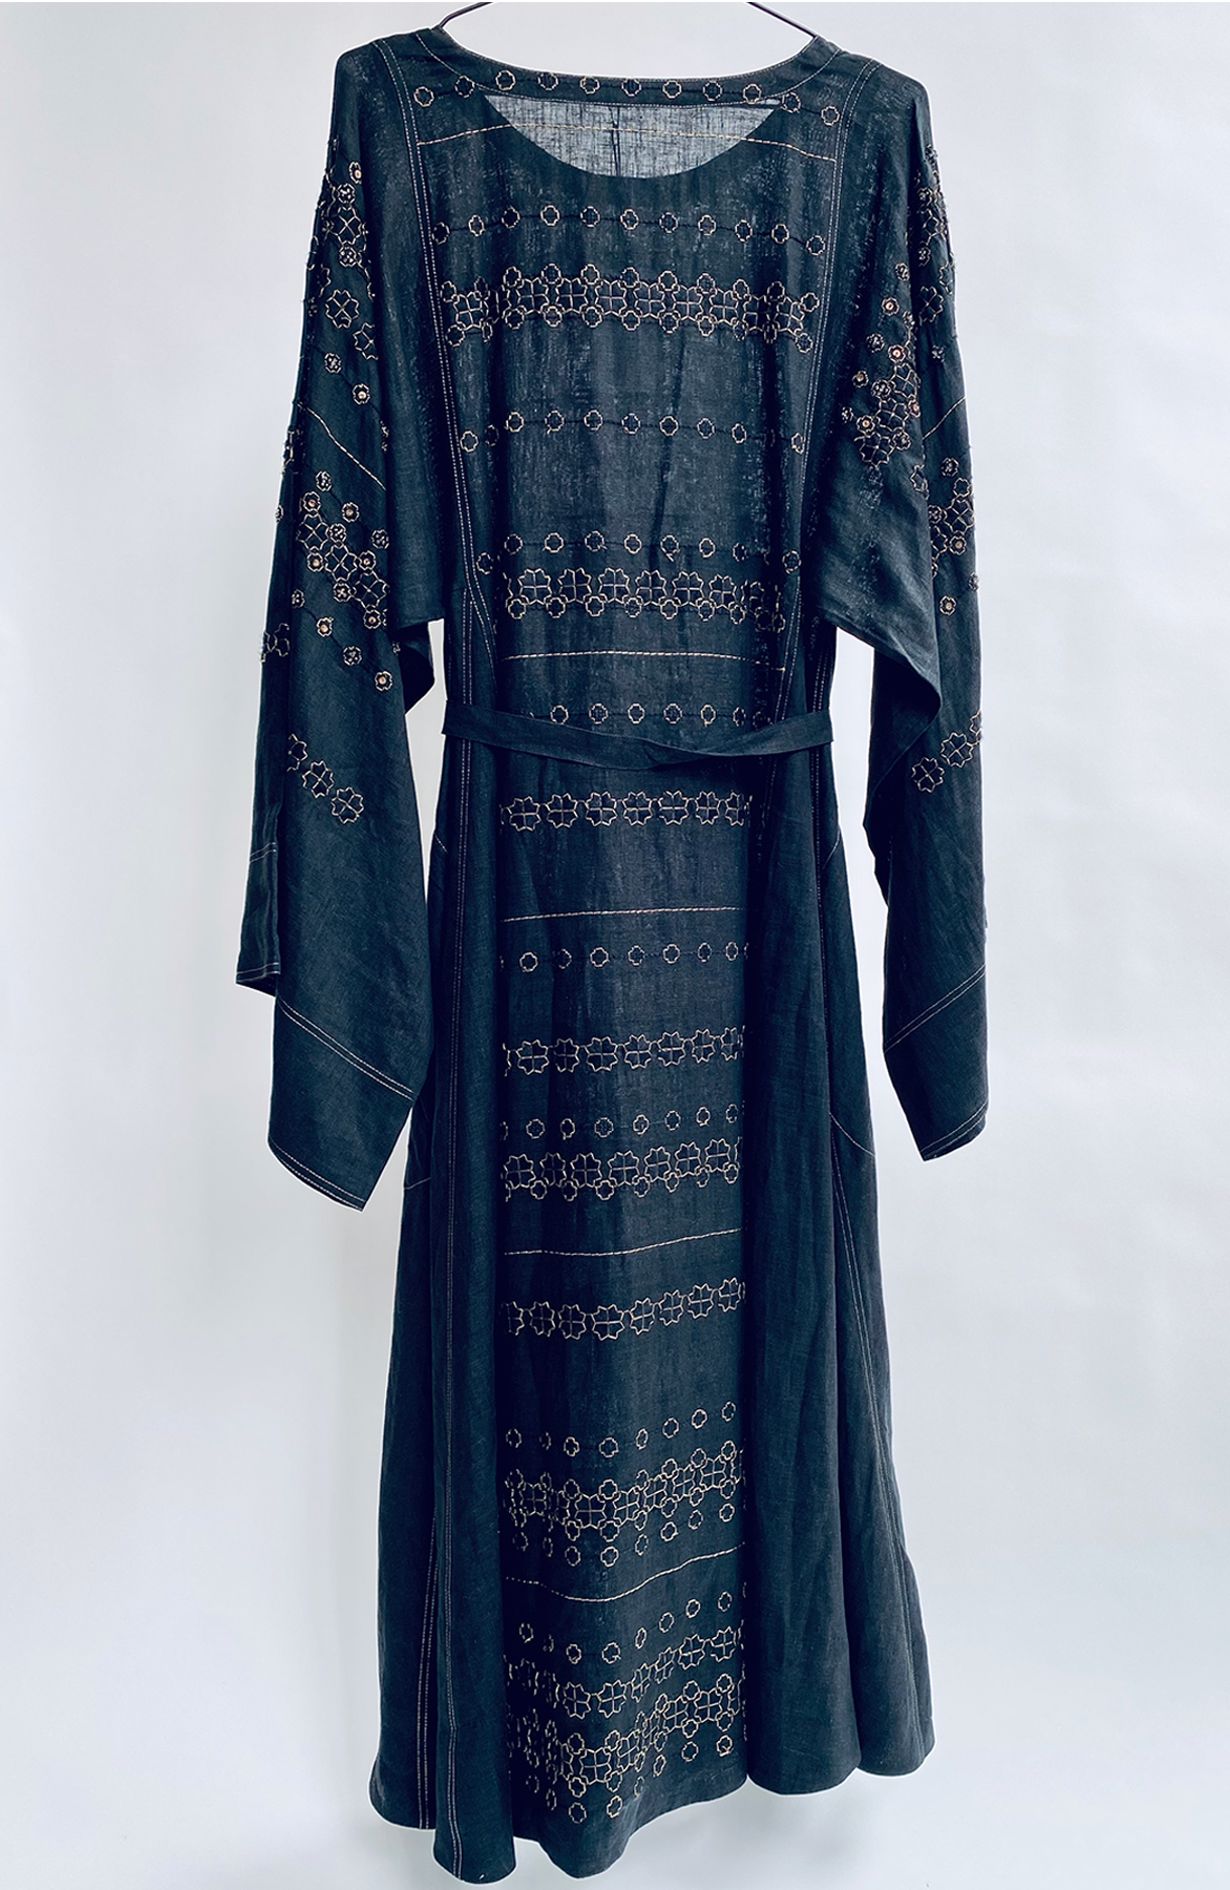 Vita Kin dress Black with gold details size S